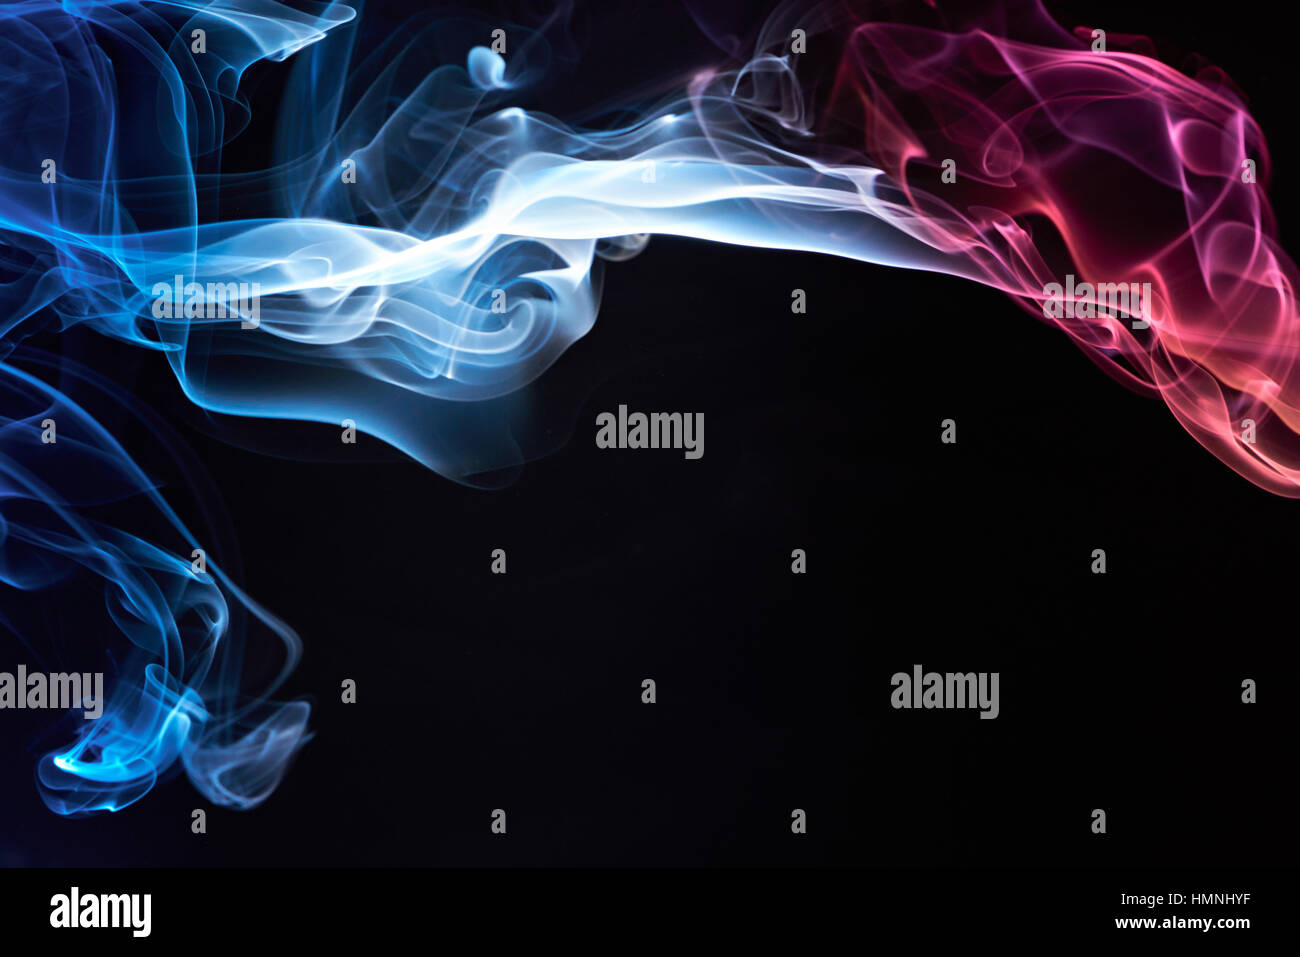 smoke colorful curves isolated on black background Stock Photo